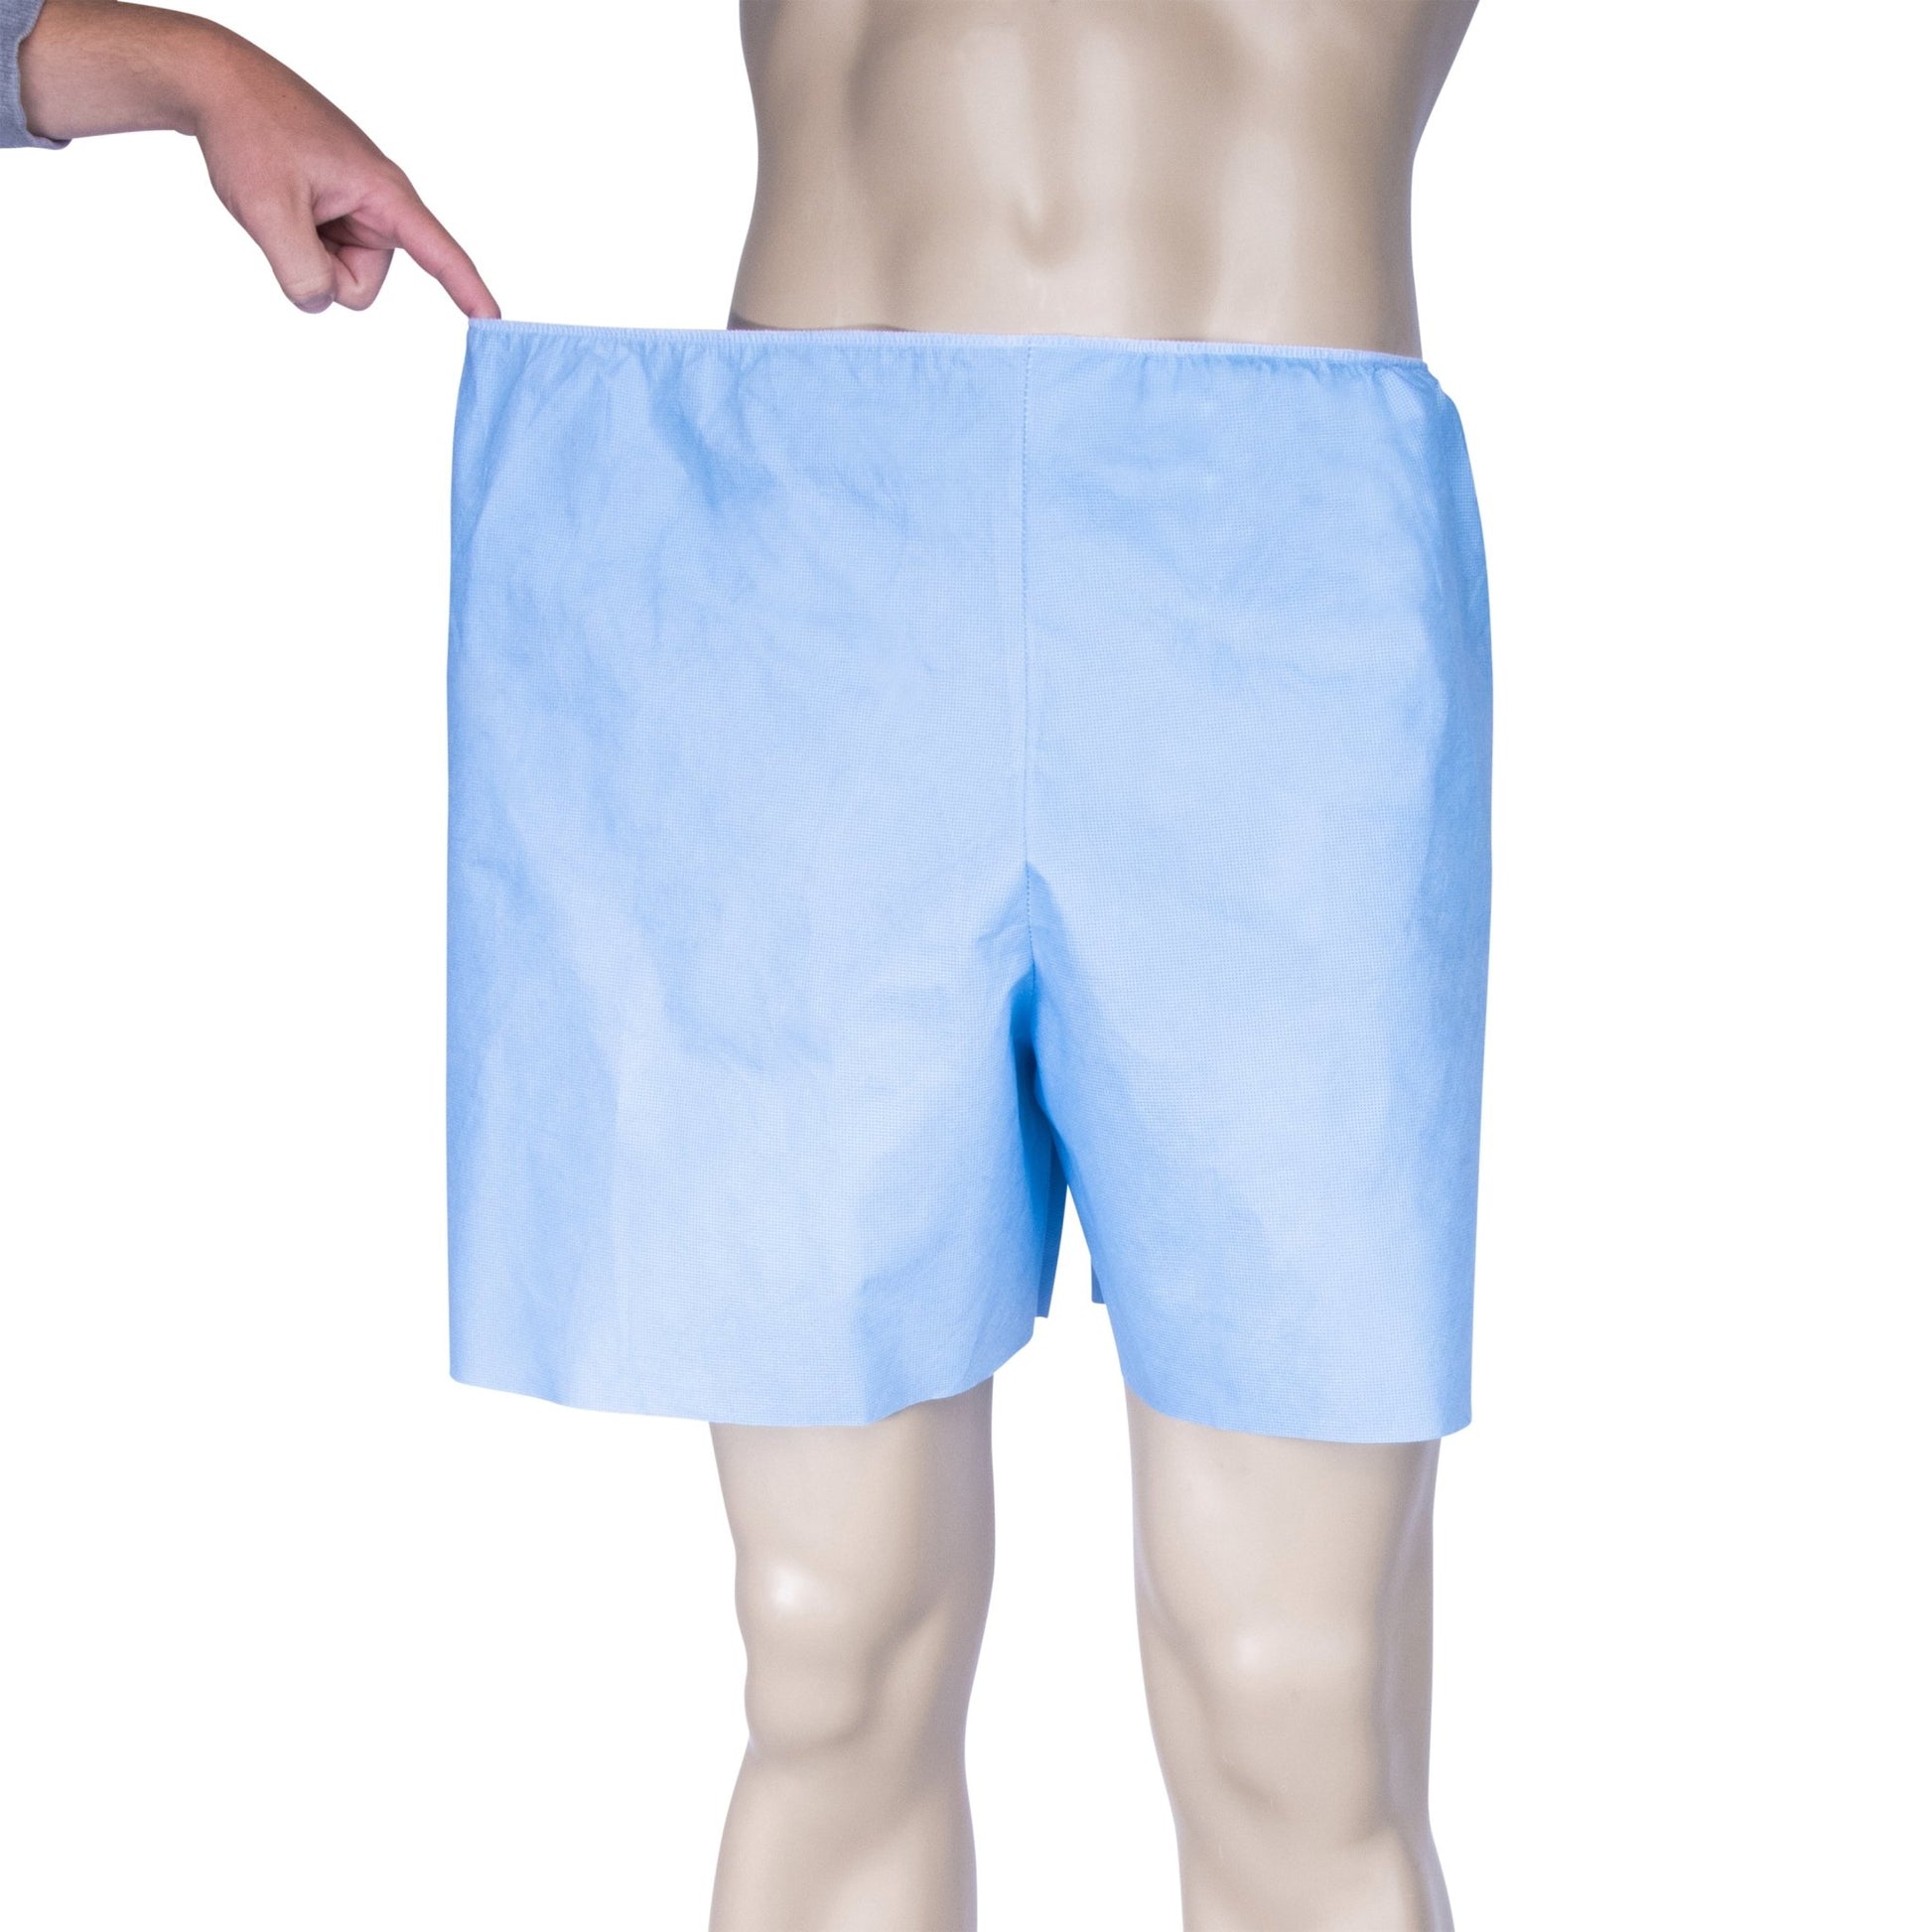 Buy Disposable Patient Exam Shorts - Secure Fit & Comfort